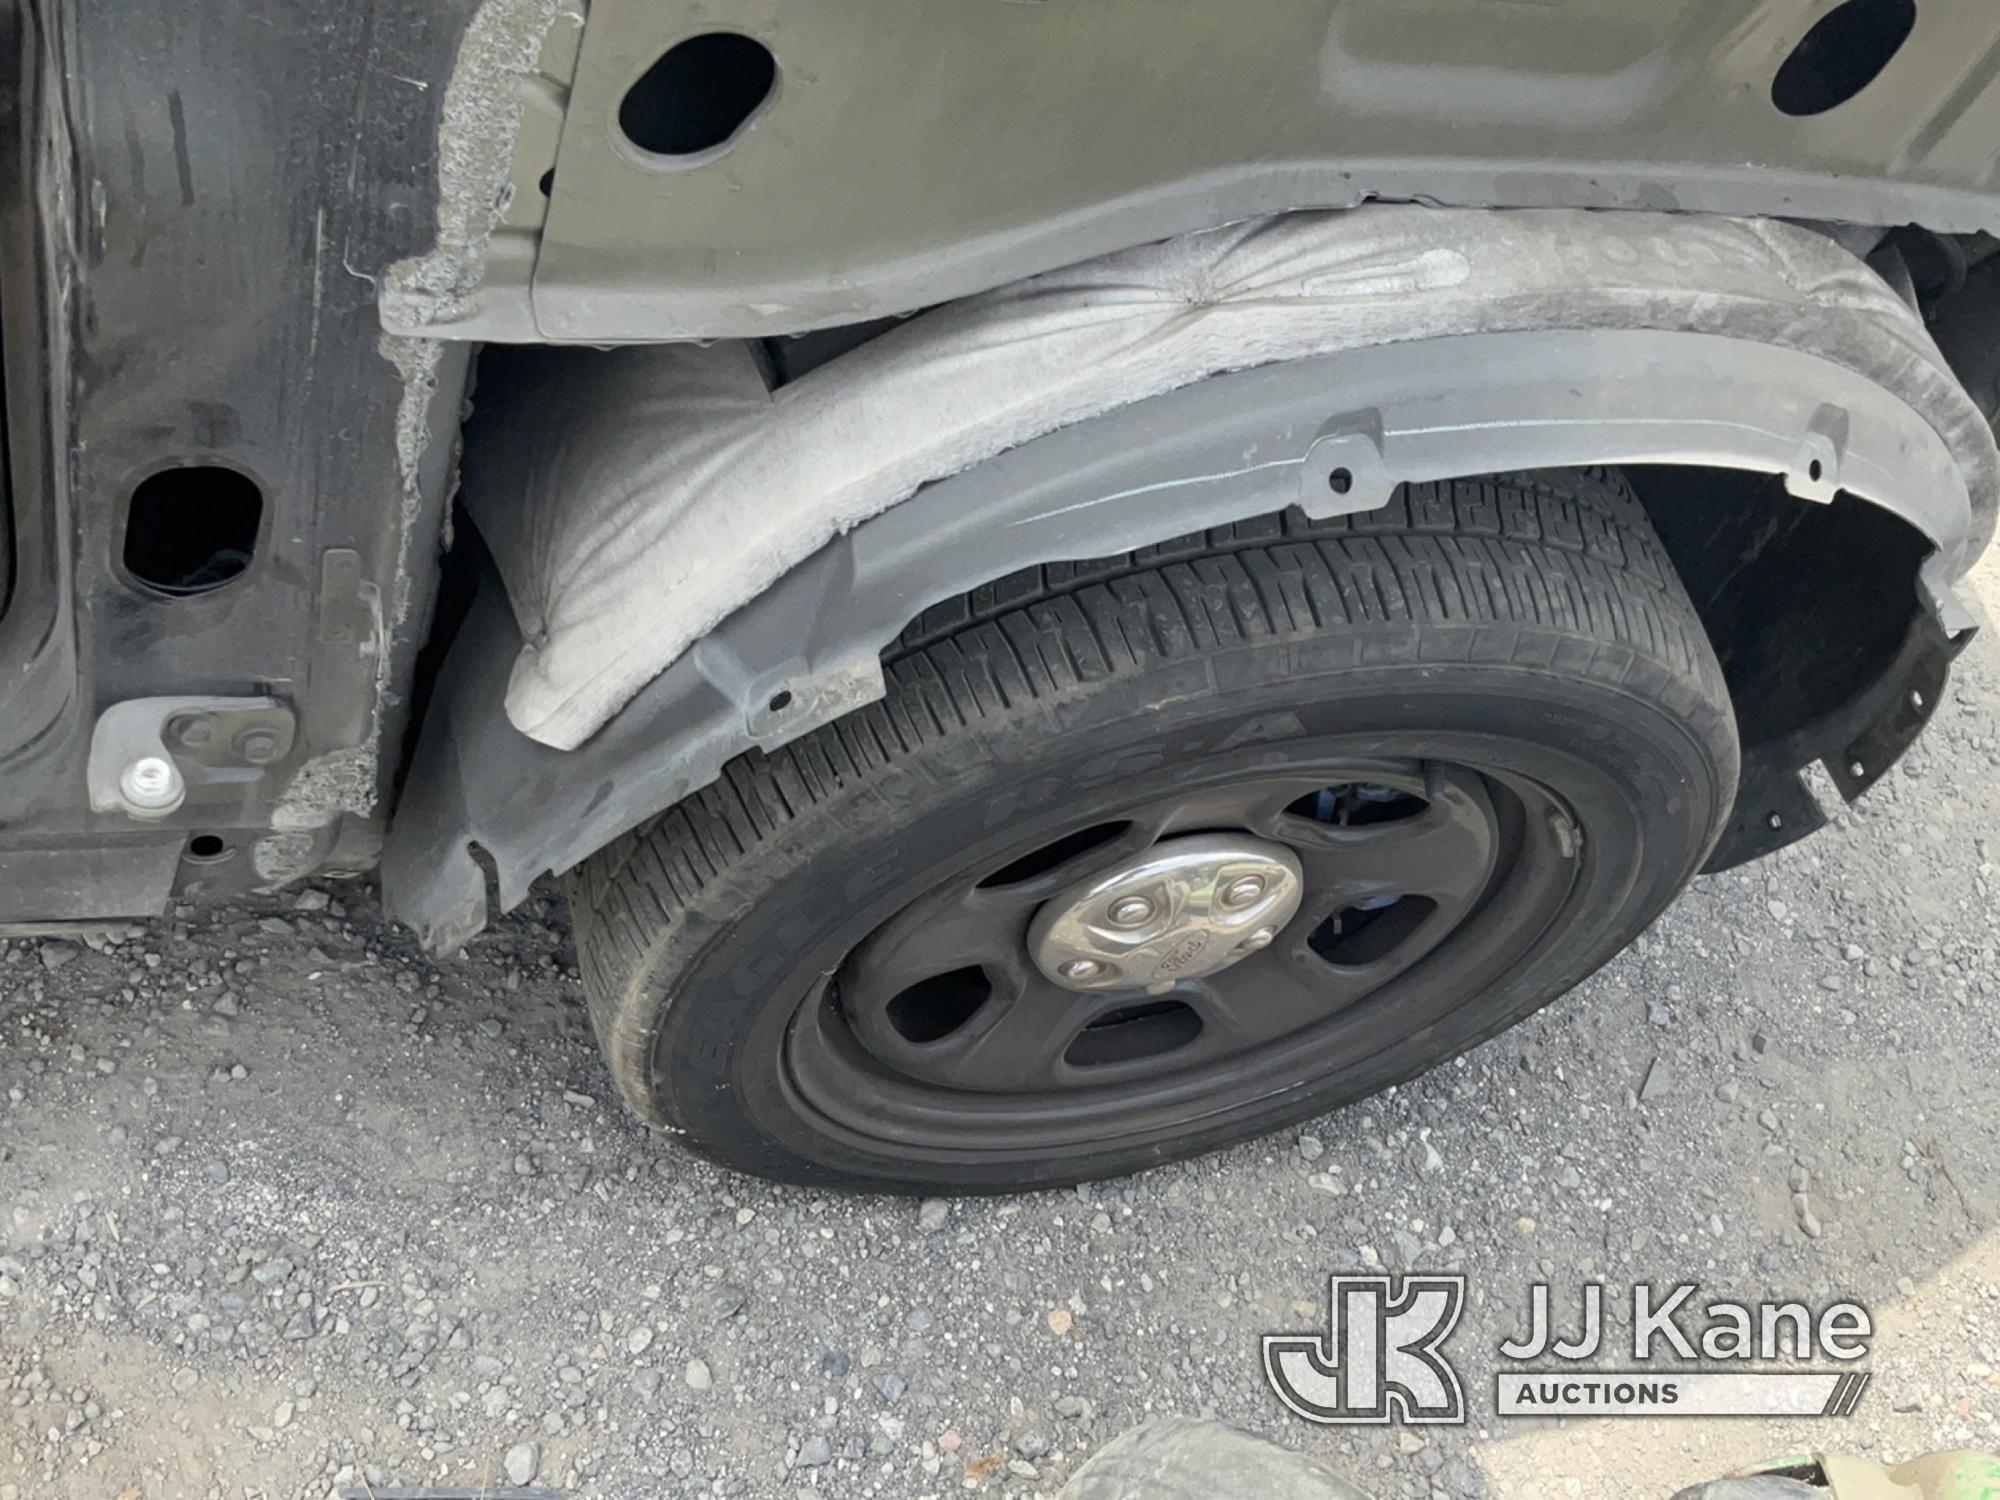 (Jurupa Valley, CA) 2014 Ford Explorer 4-Door Sport Utility Vehicle Not Running , No Key , Stripped